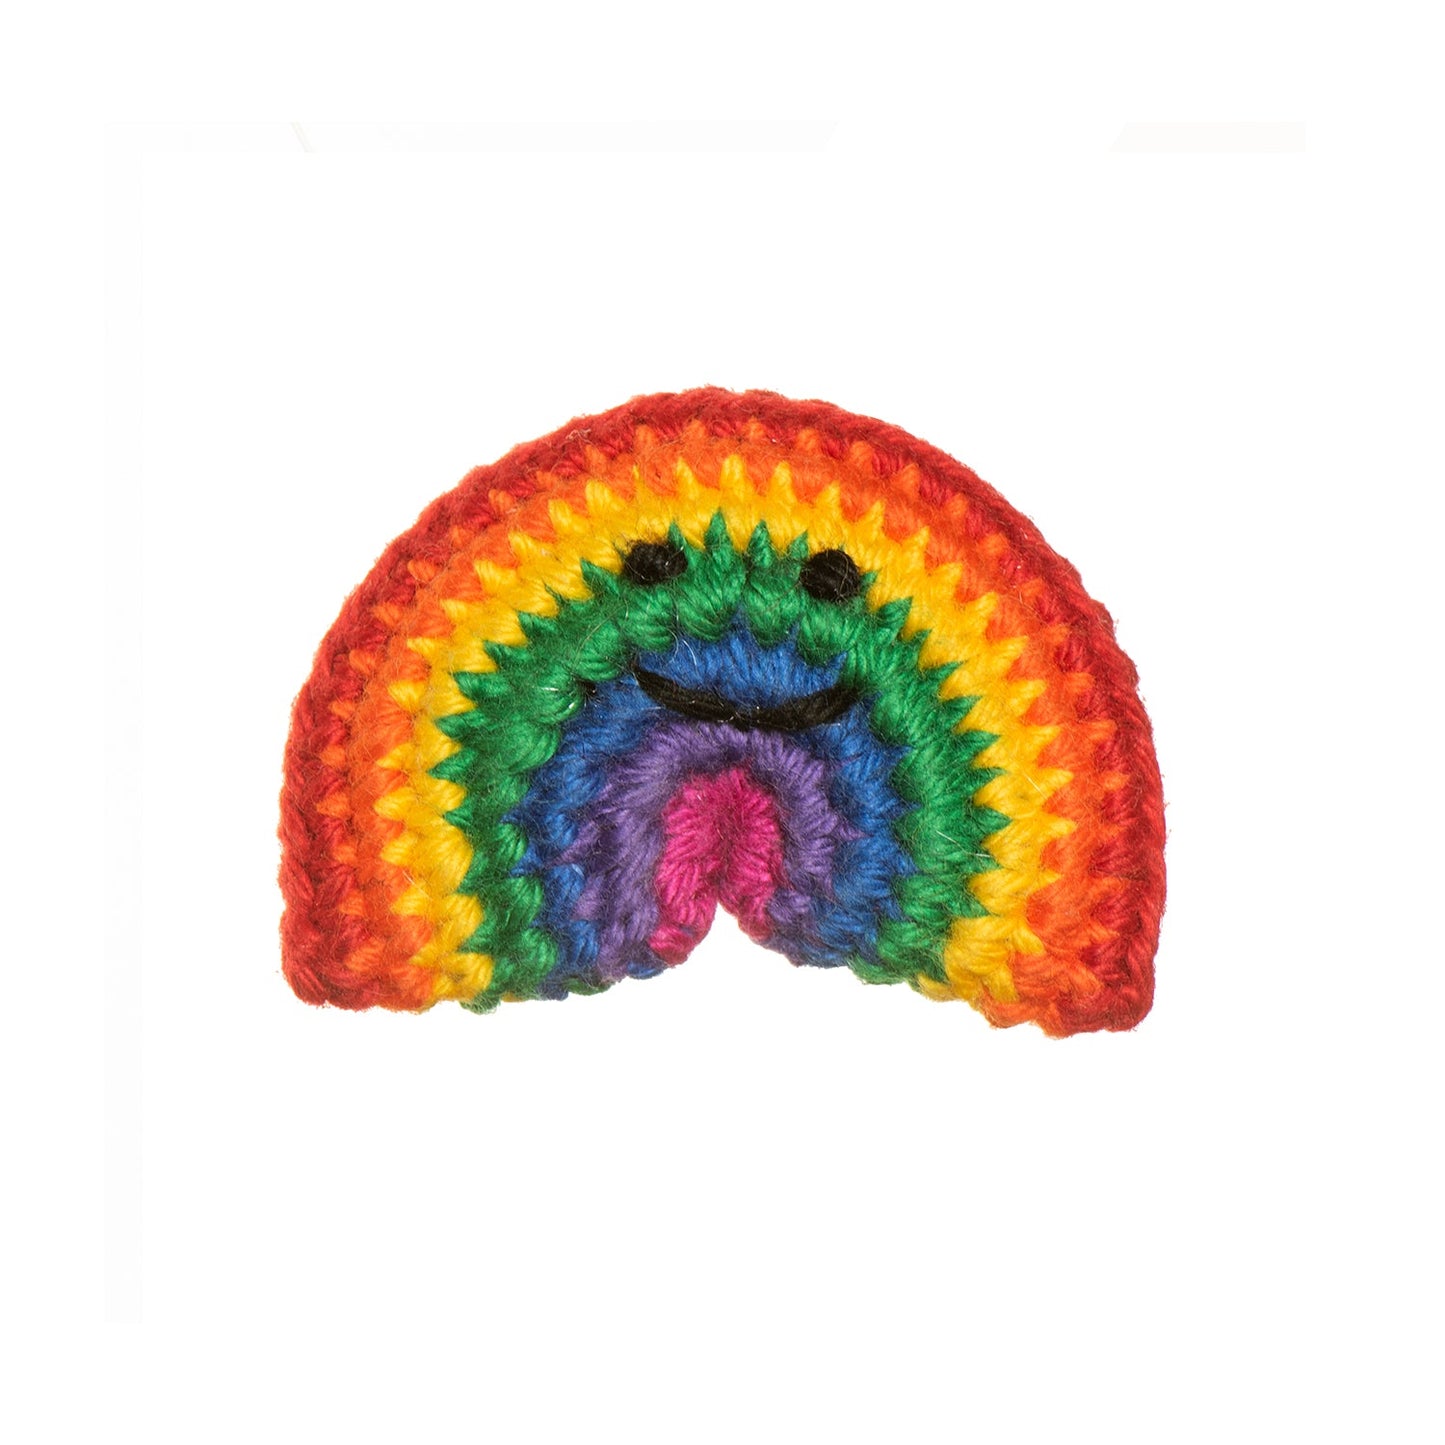 Crochet rainbow brooch with a little smiley face in black thread.